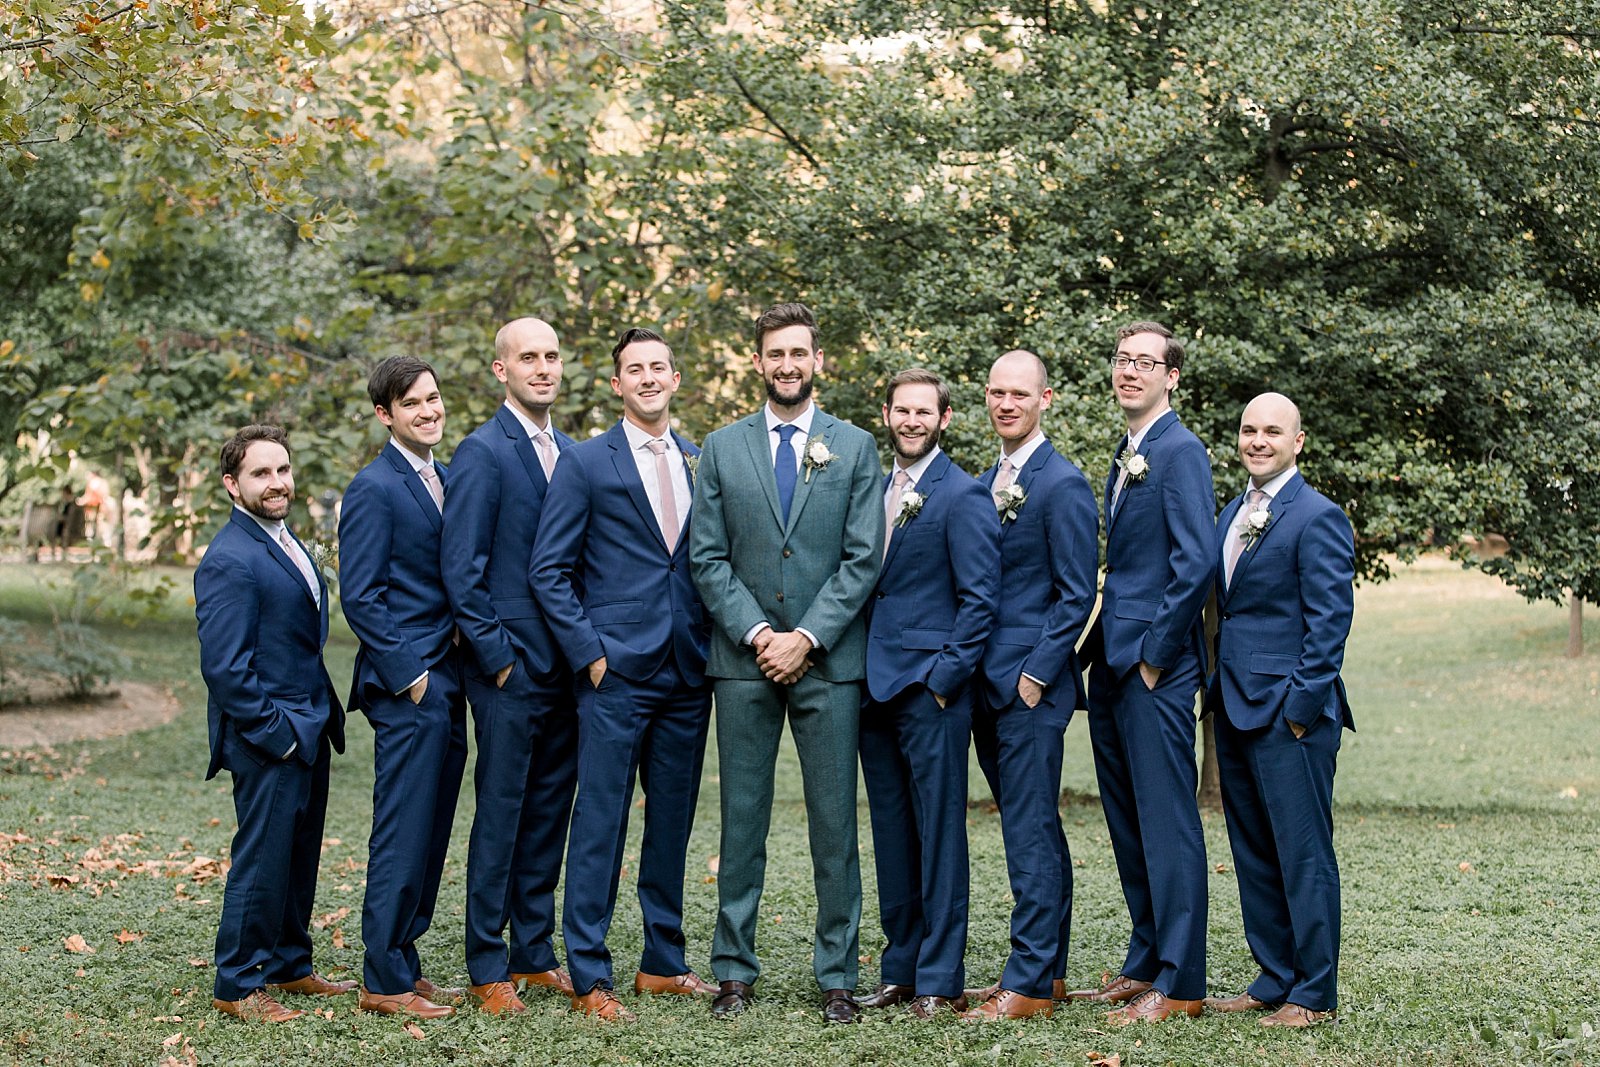 groom stands with groomsmen in navy suits with pink ties 